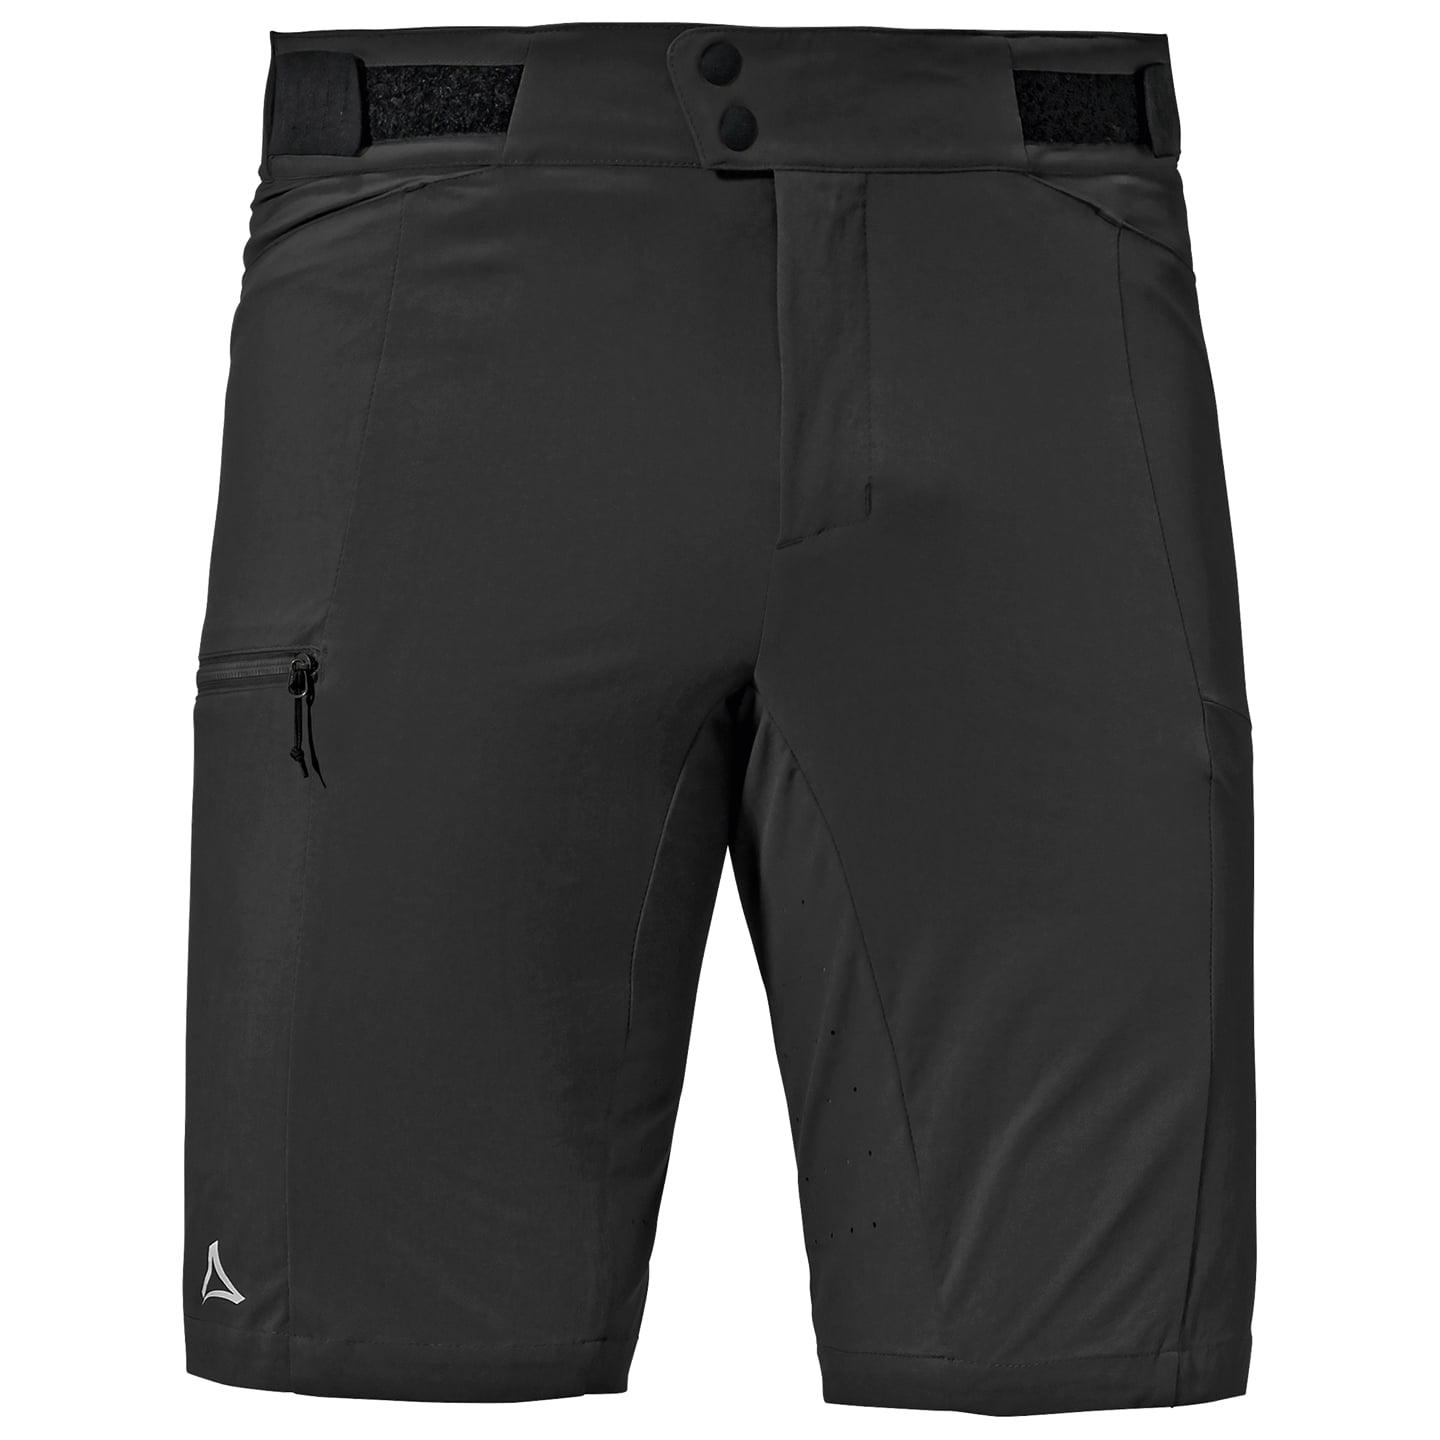 SCHOFFEL Montosoli w/o Pad Bike Shorts, for men, size 52